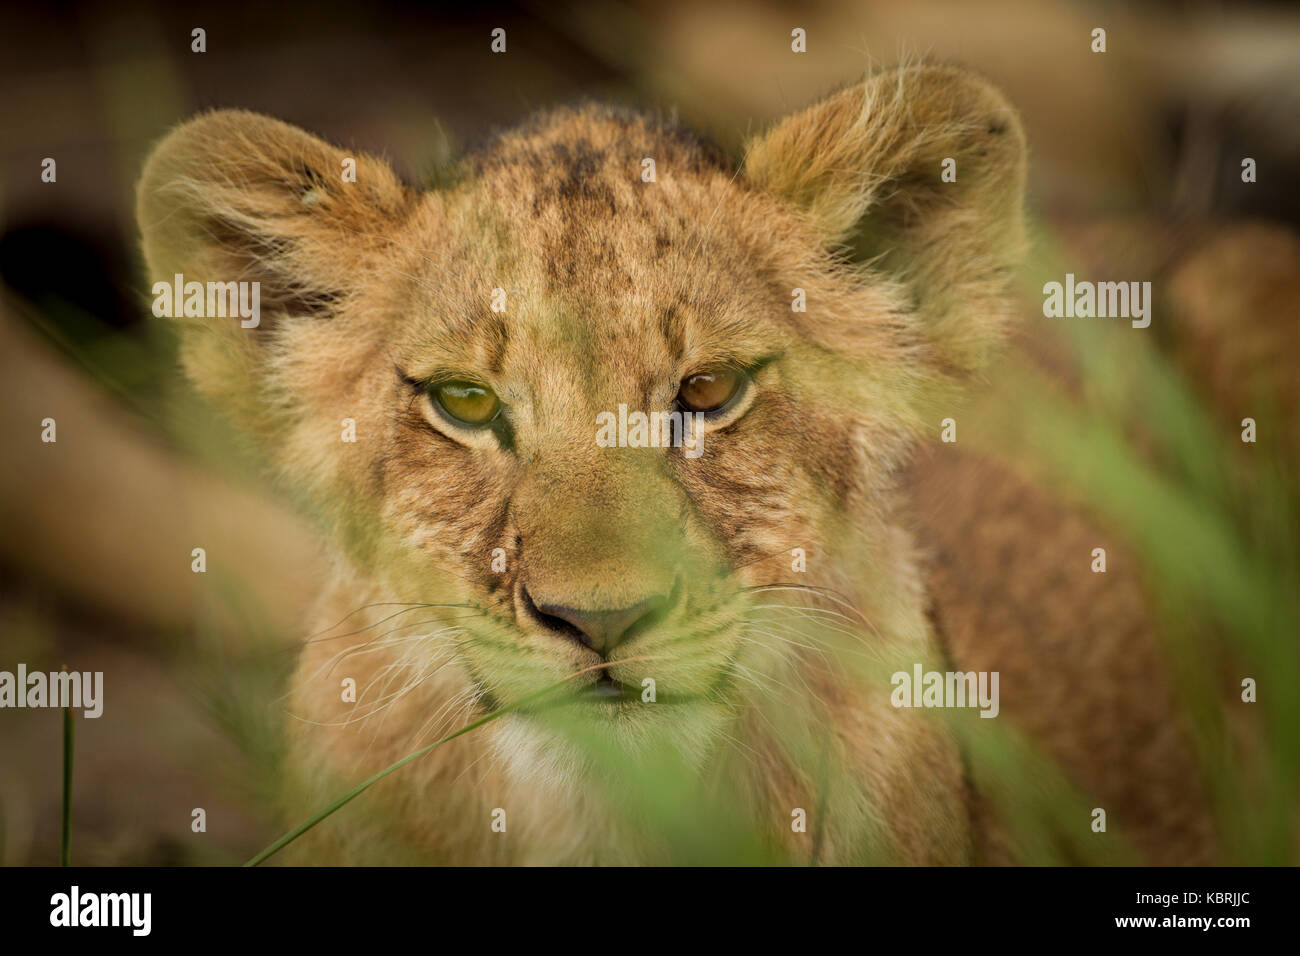 Lion cub facing camera through grass looking pensive Stock Photo